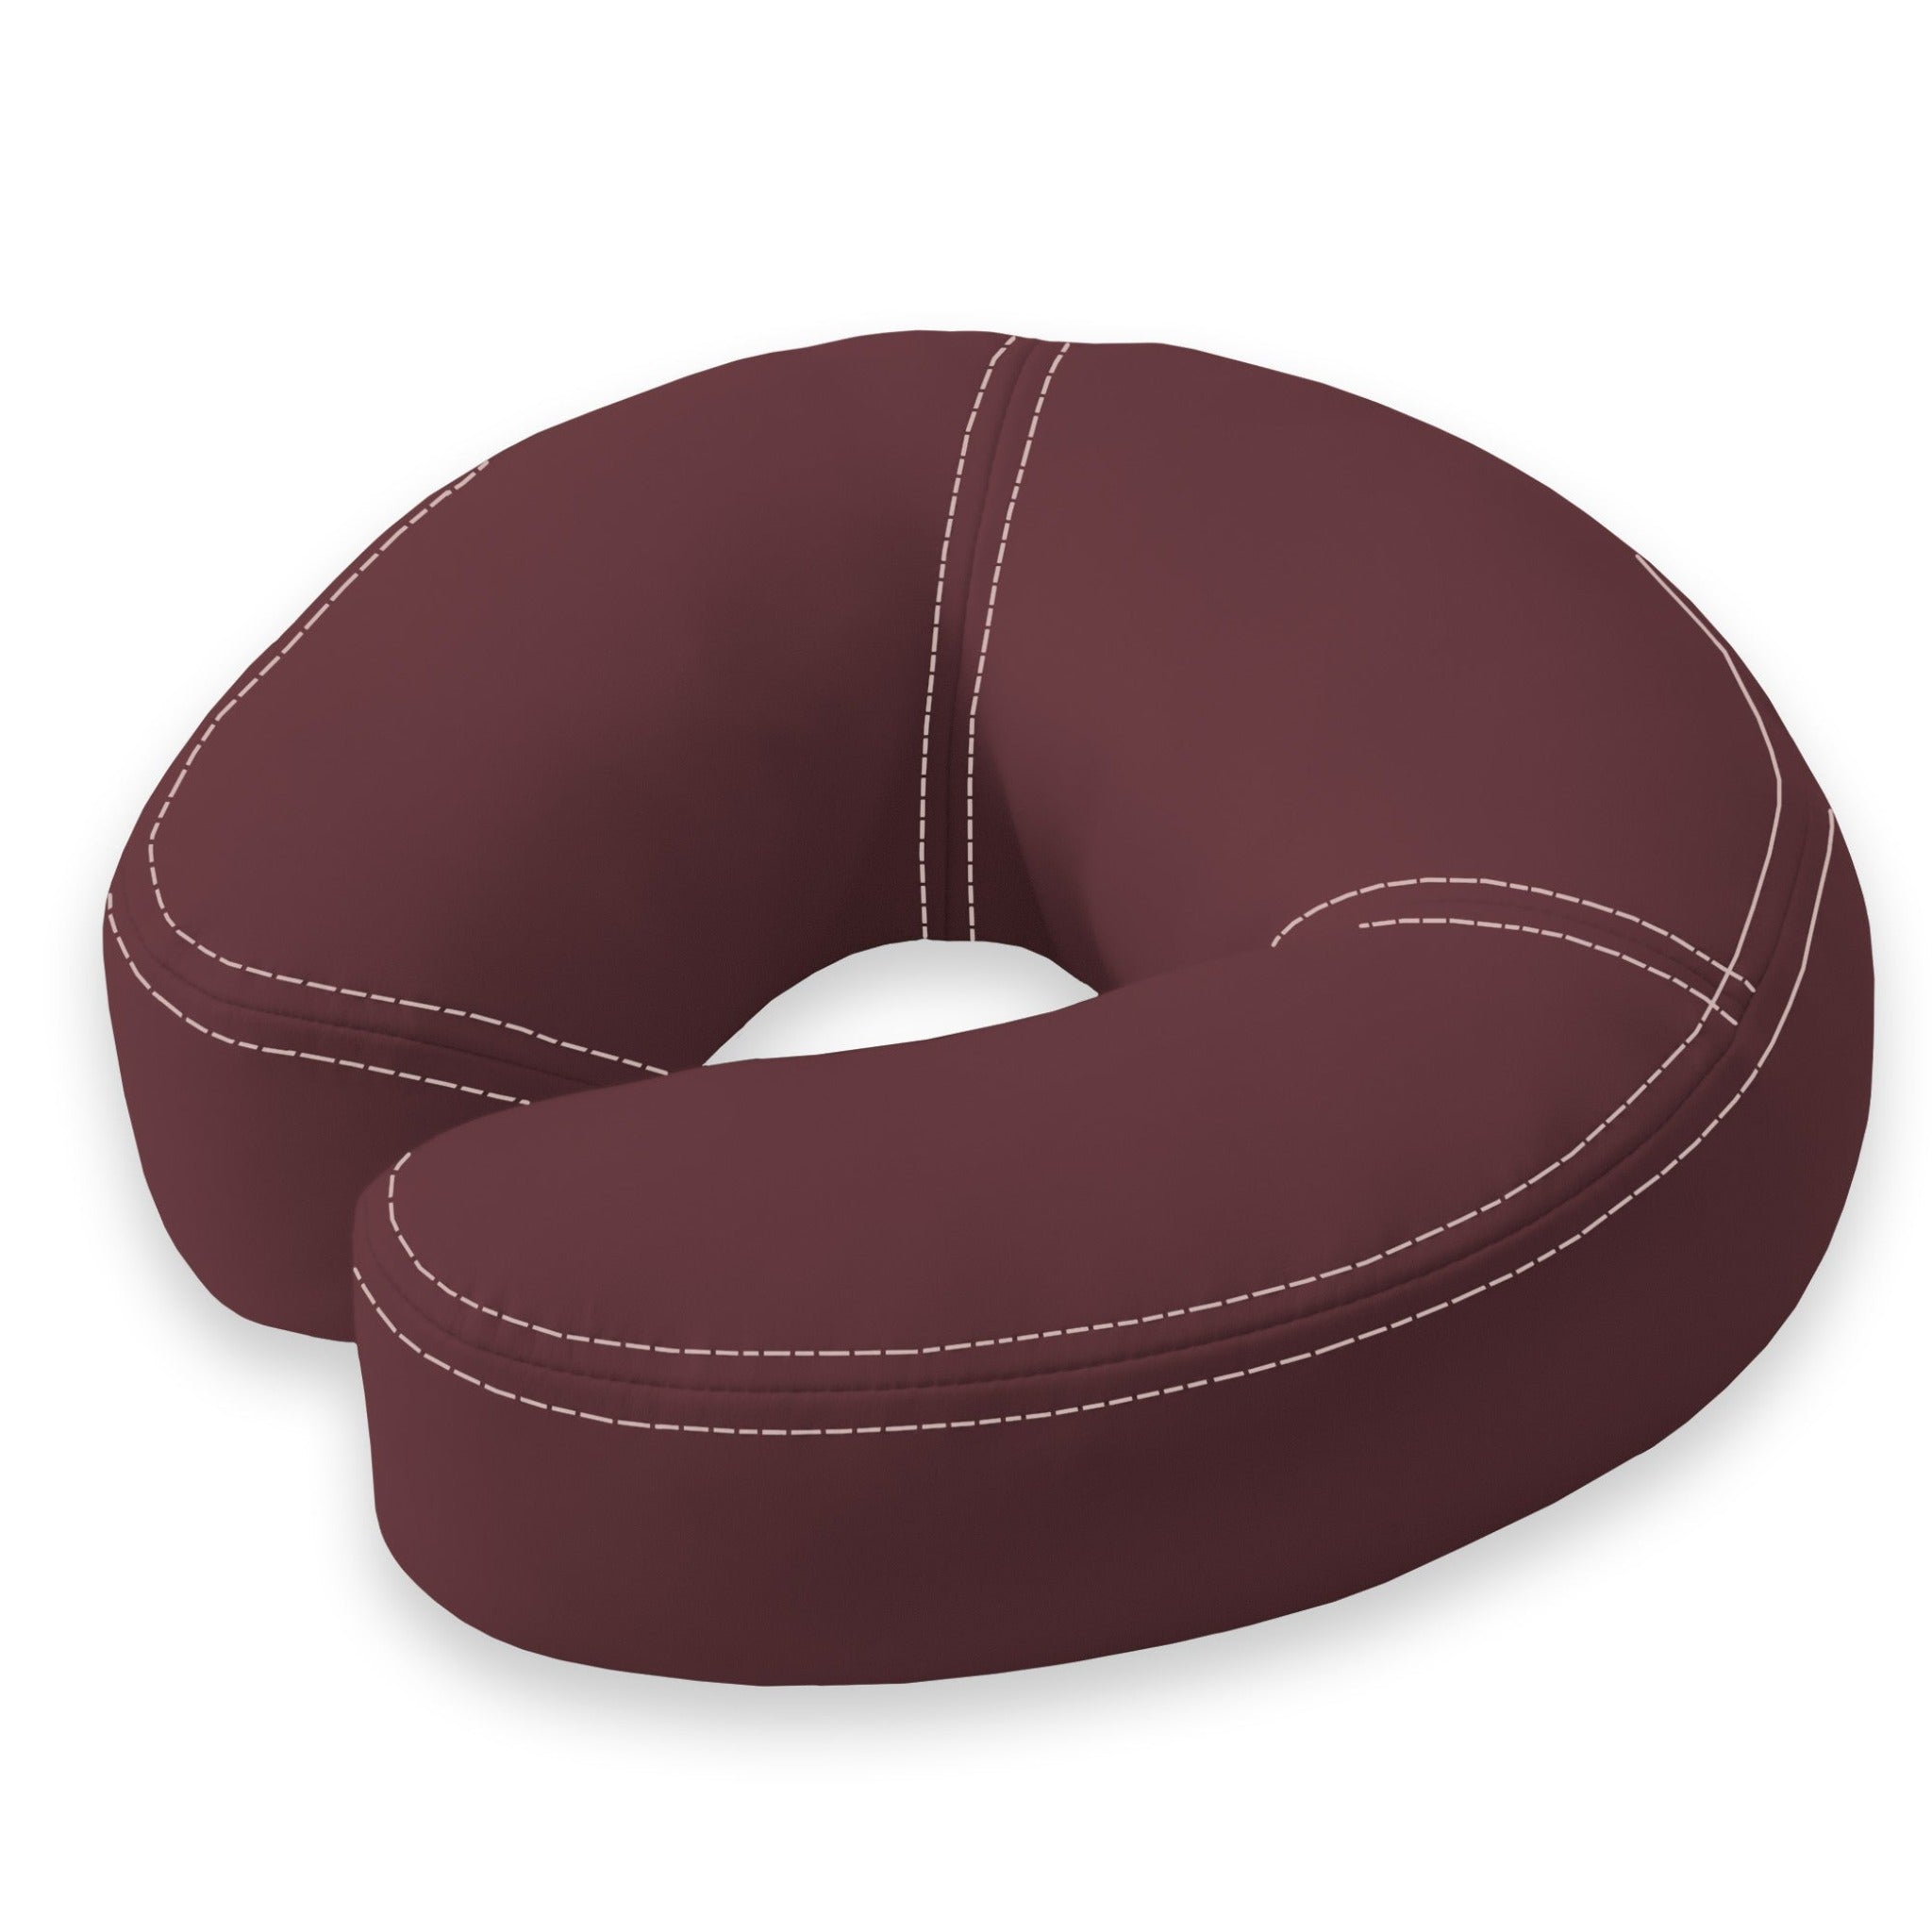 EarthLite Strata Head Cushion Pillow for Massage Table